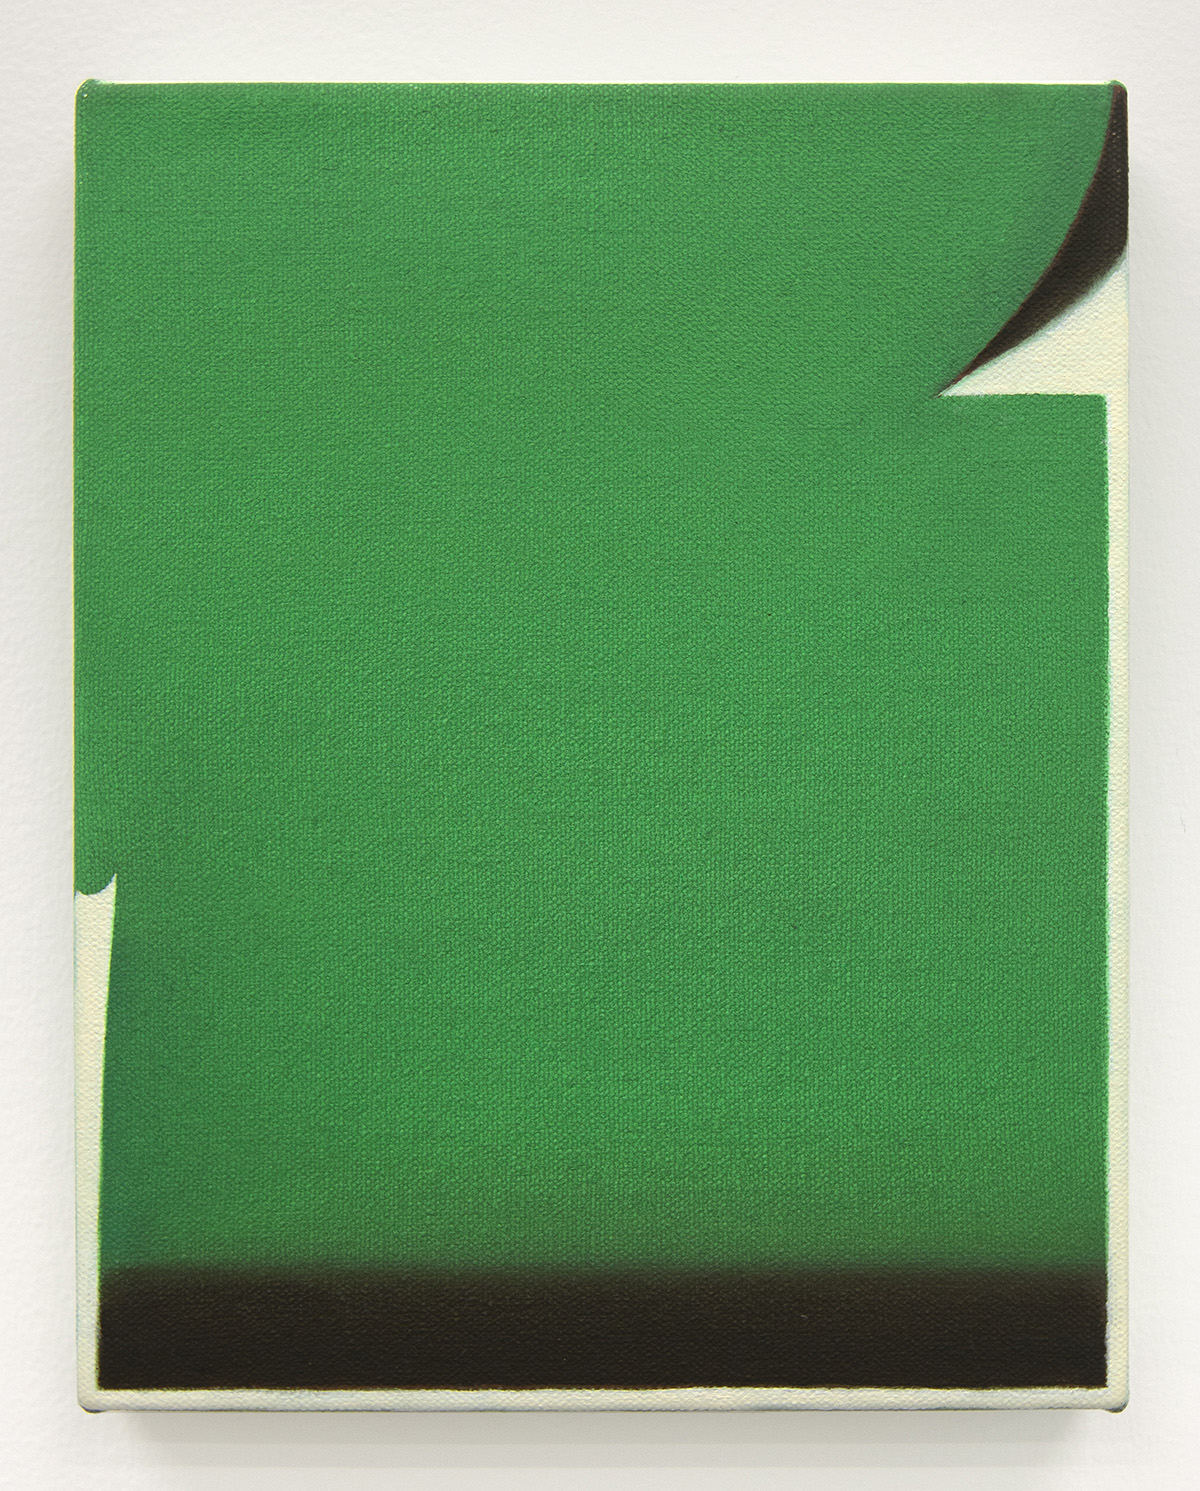 Shi Jiayun, Green #1, 2018, oil on canvas, 25.4 x 20.3 cm, 10 x 8 in.​